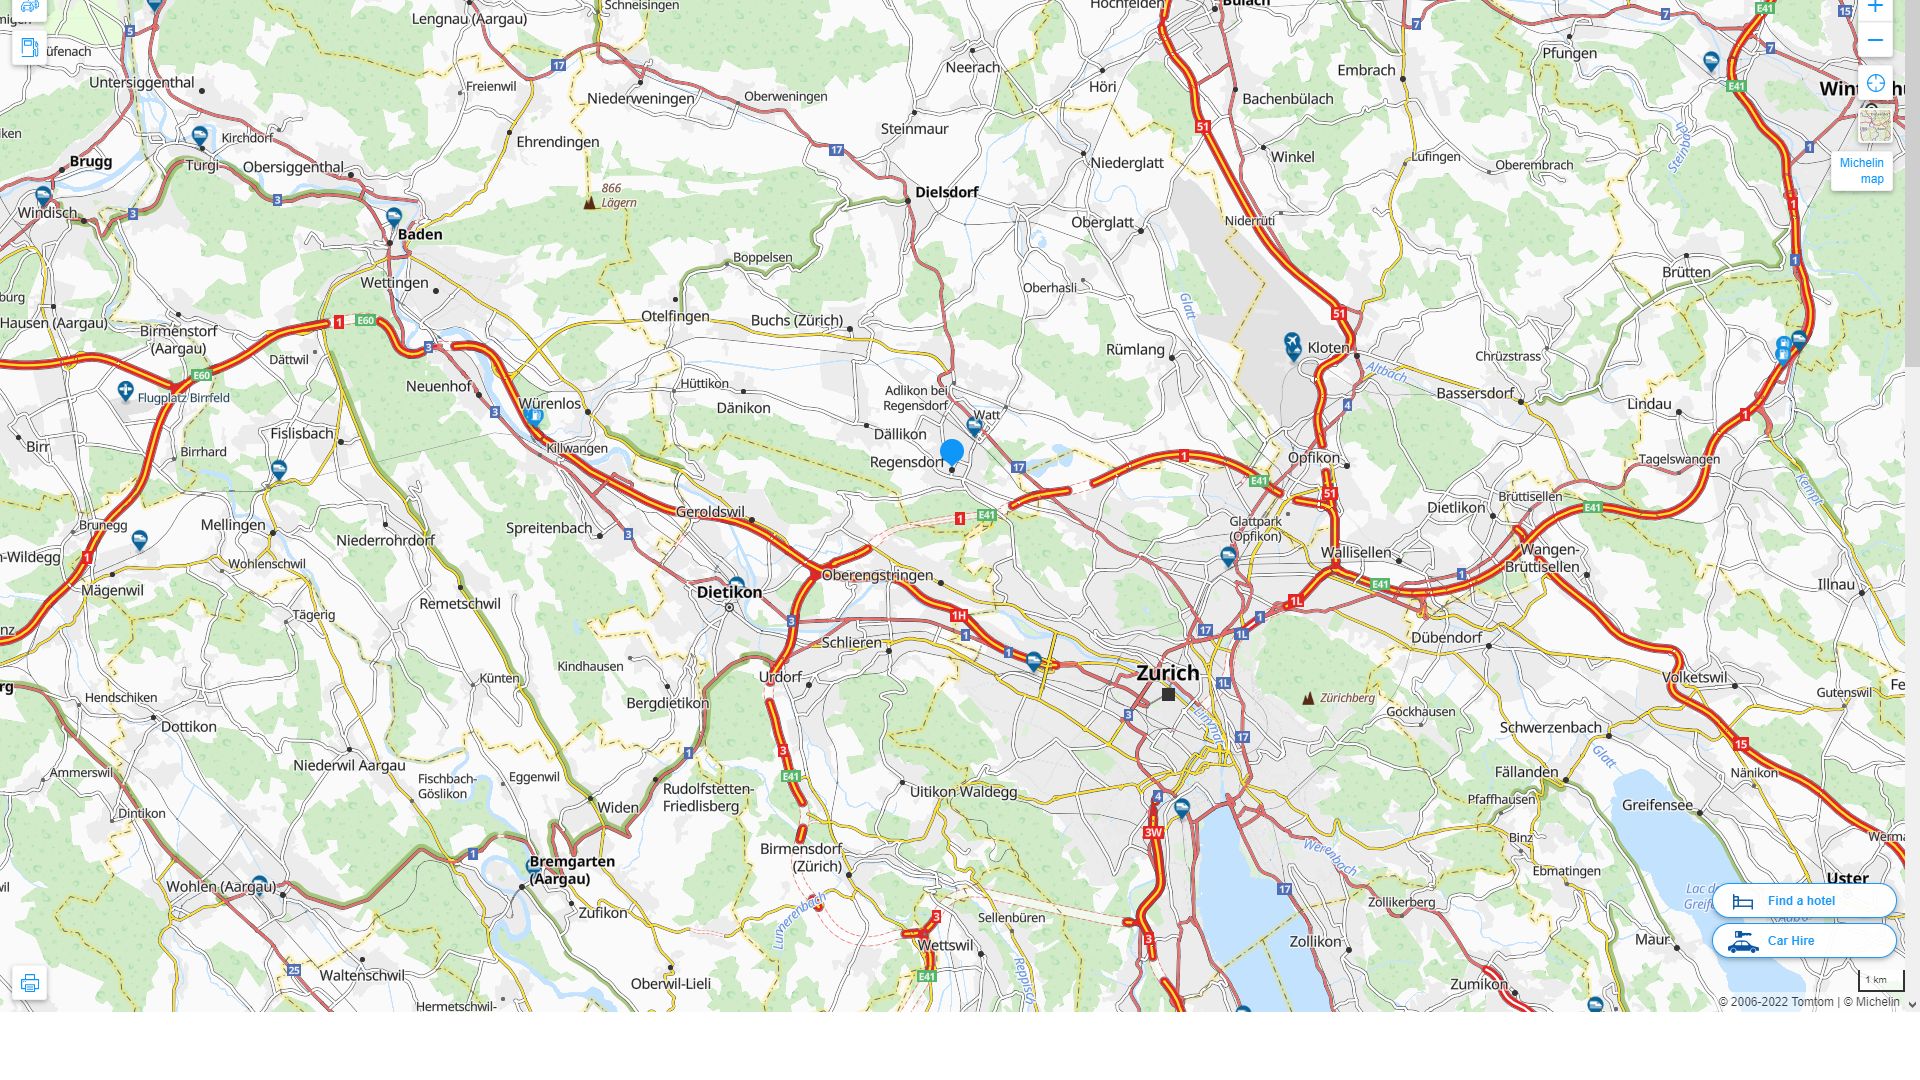 Regensdorf Suisse Autoroute et carte routiere